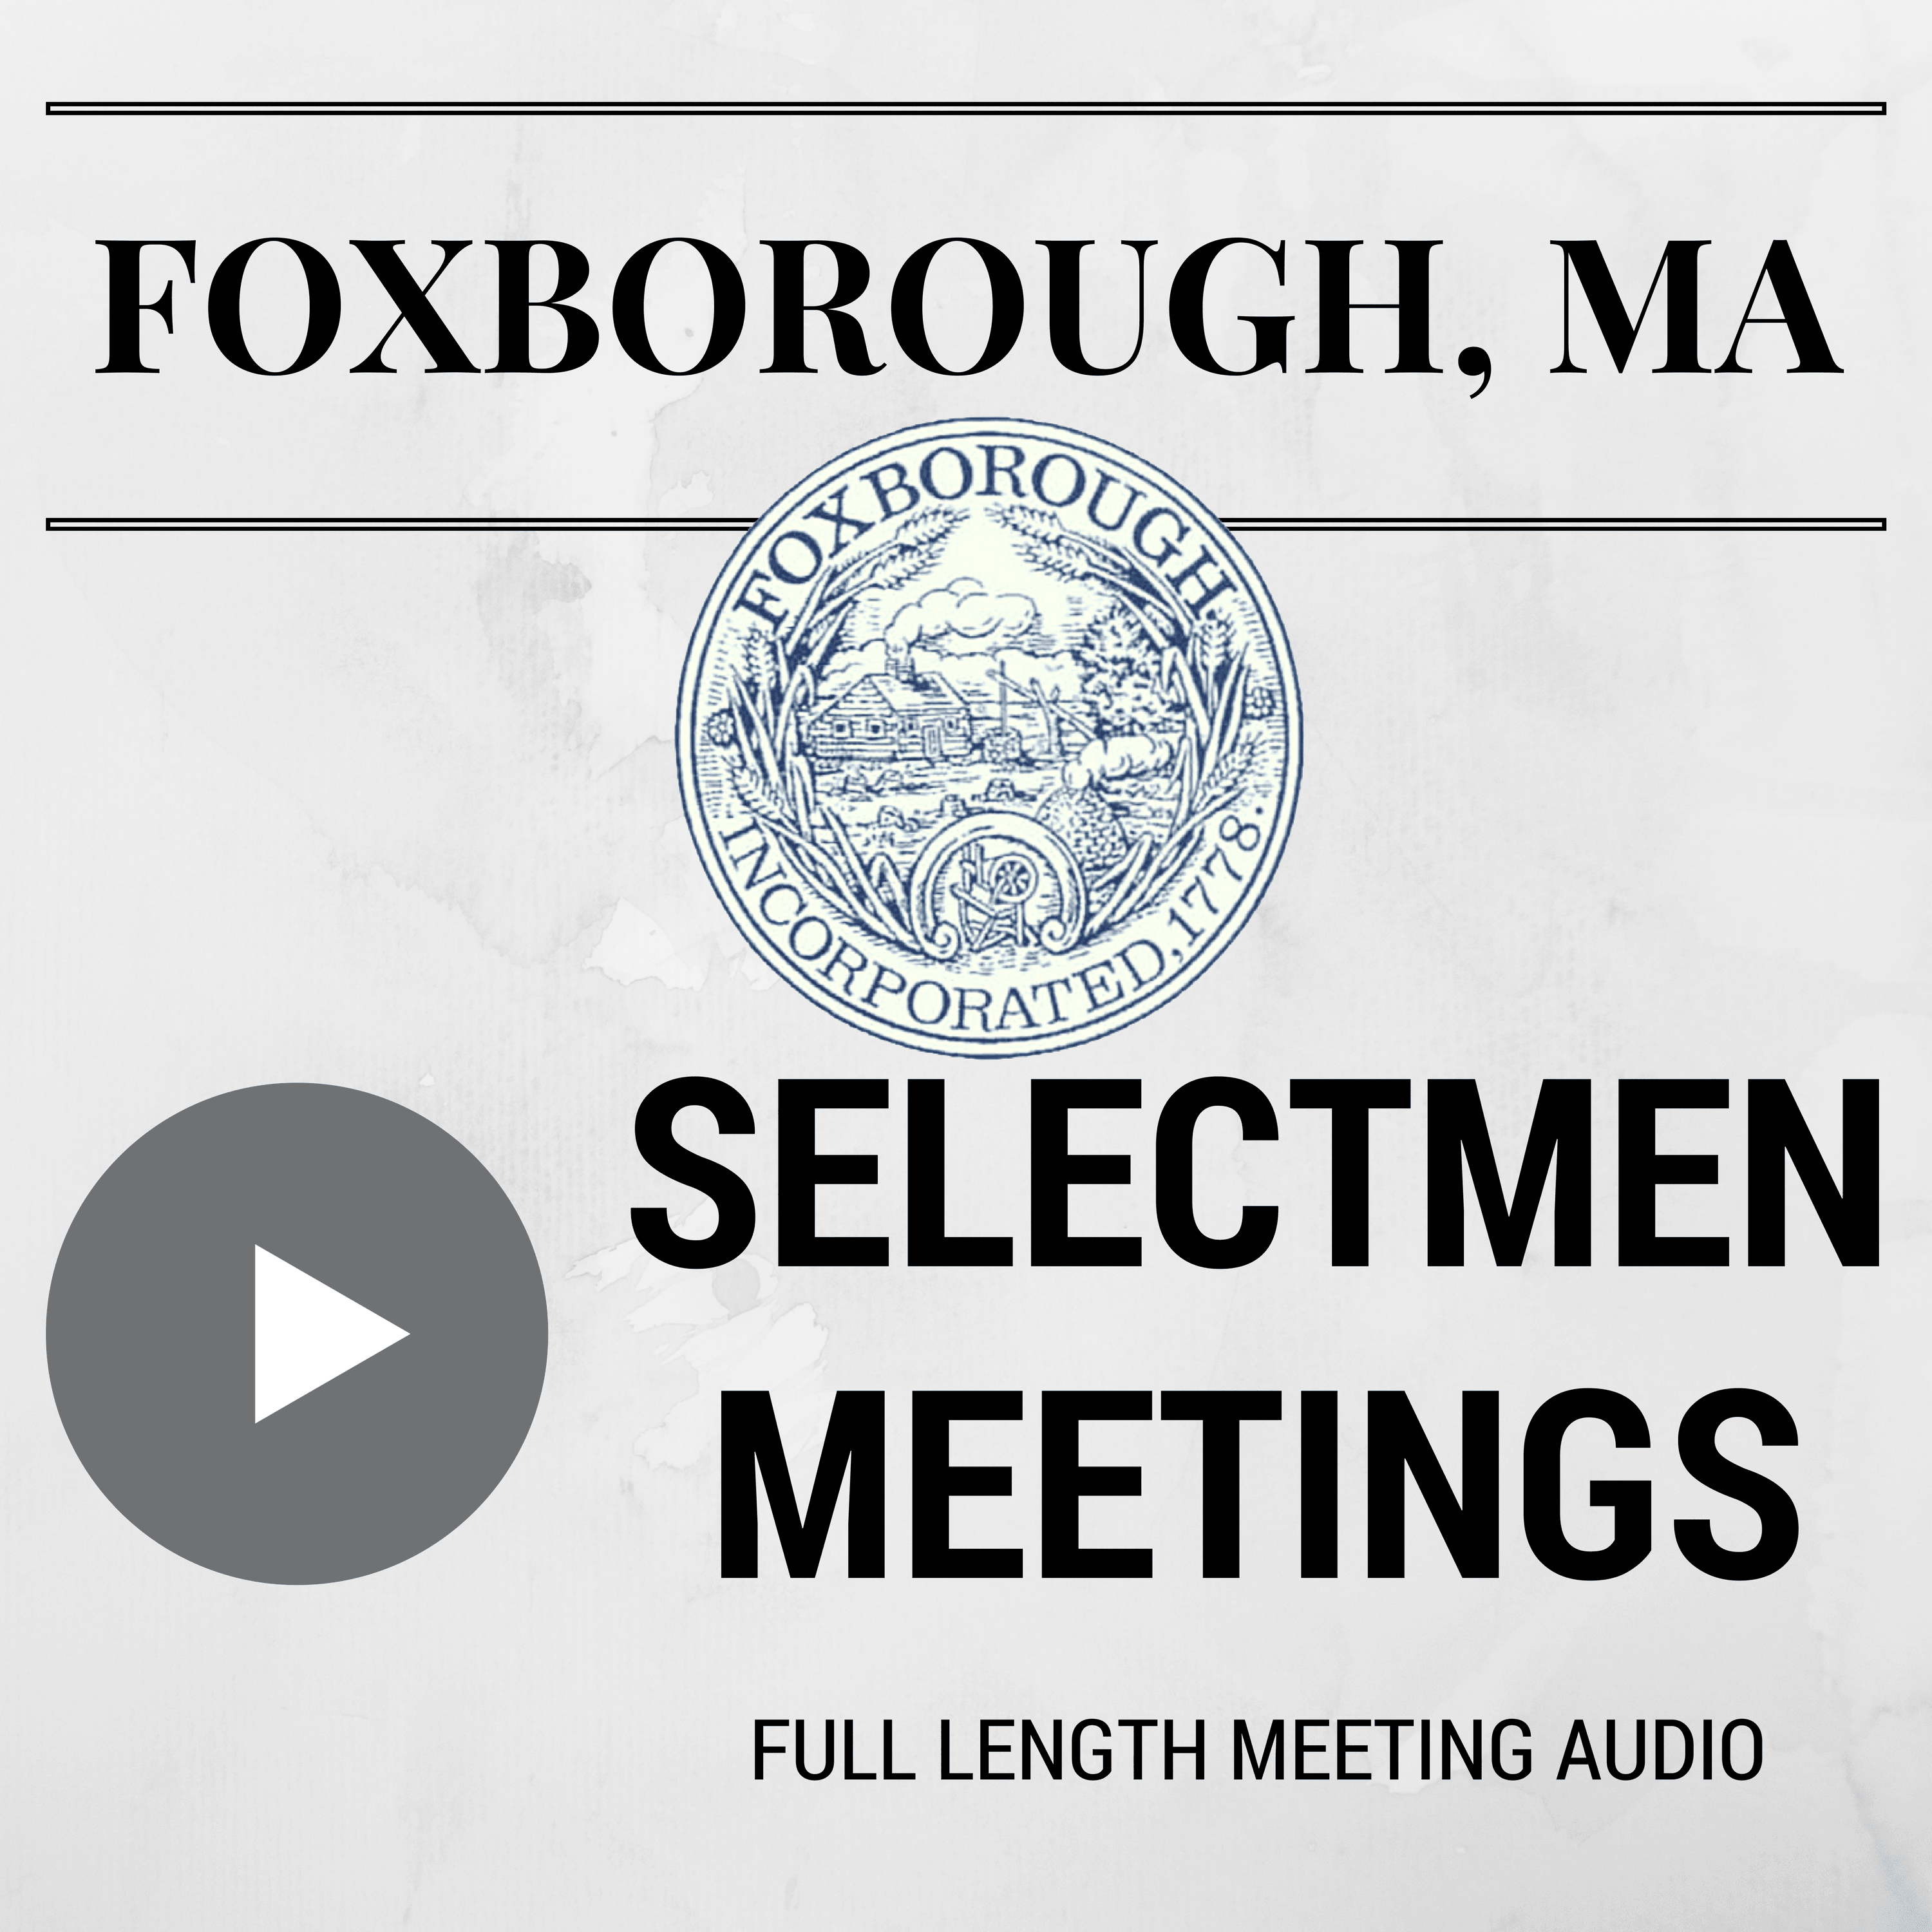 Foxborough Board of Selectmen Meetings